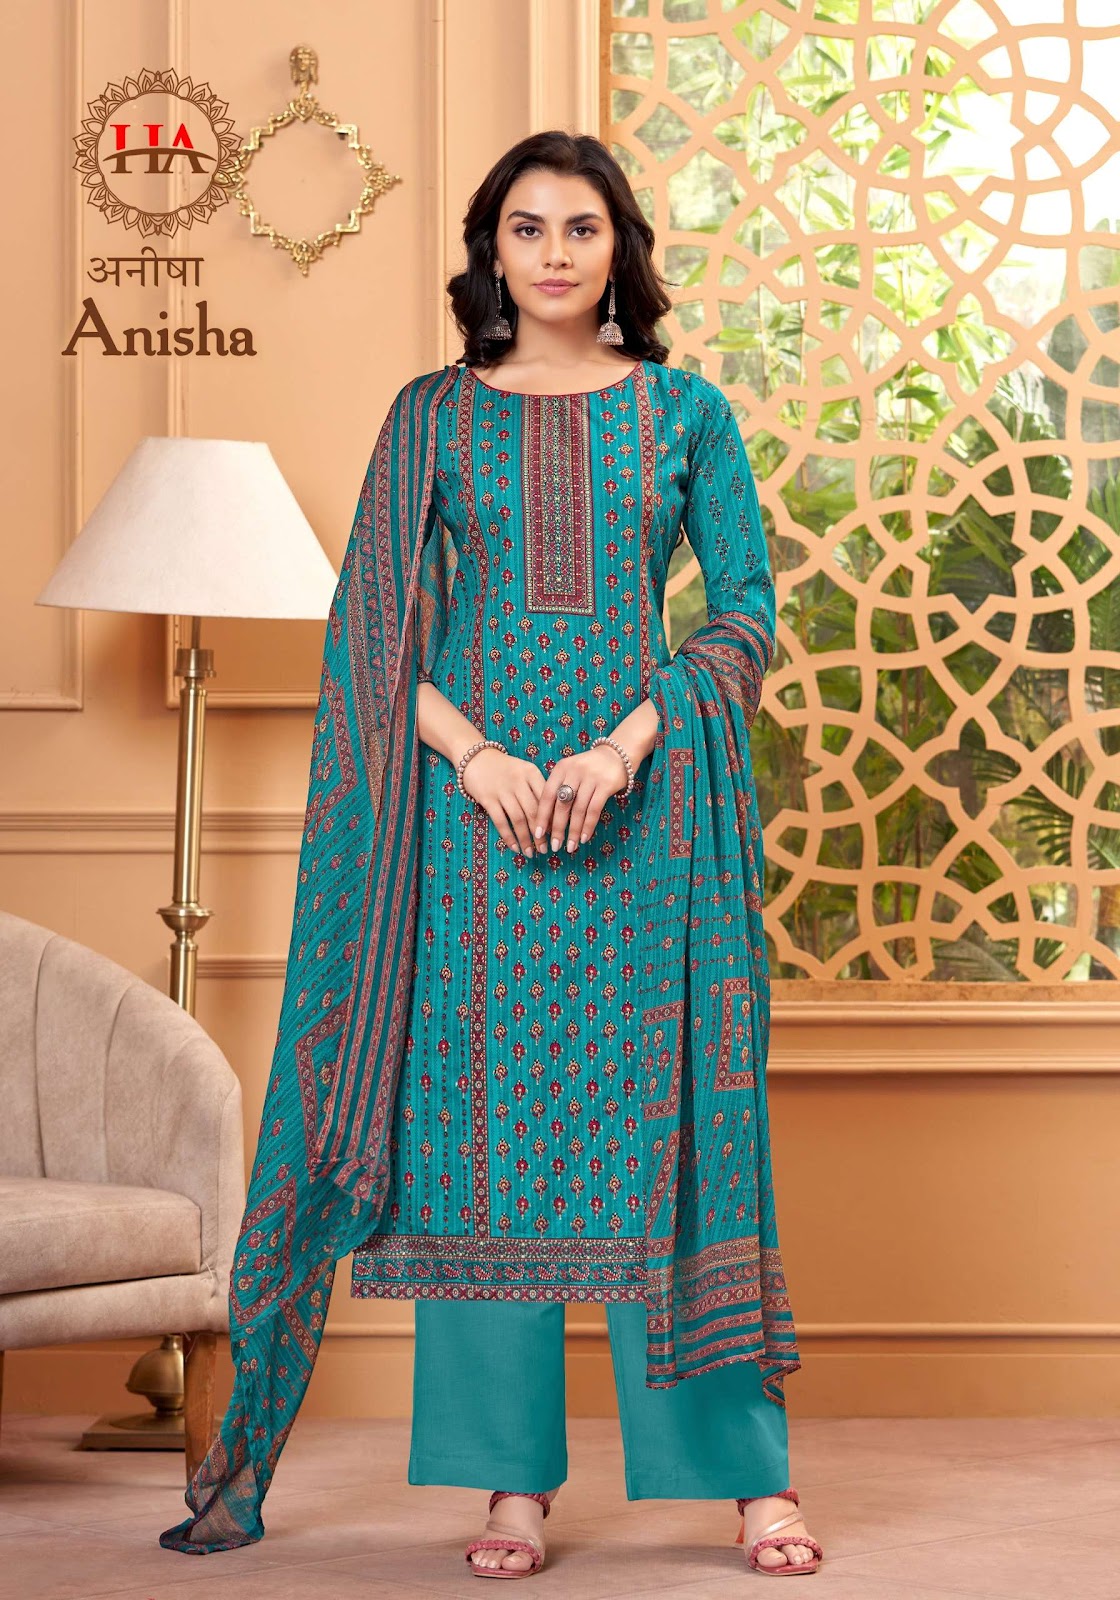 Anisha Harshit Fashion Cotton Cambric Plazzo Style Suits Wholesaler Ahmedabad